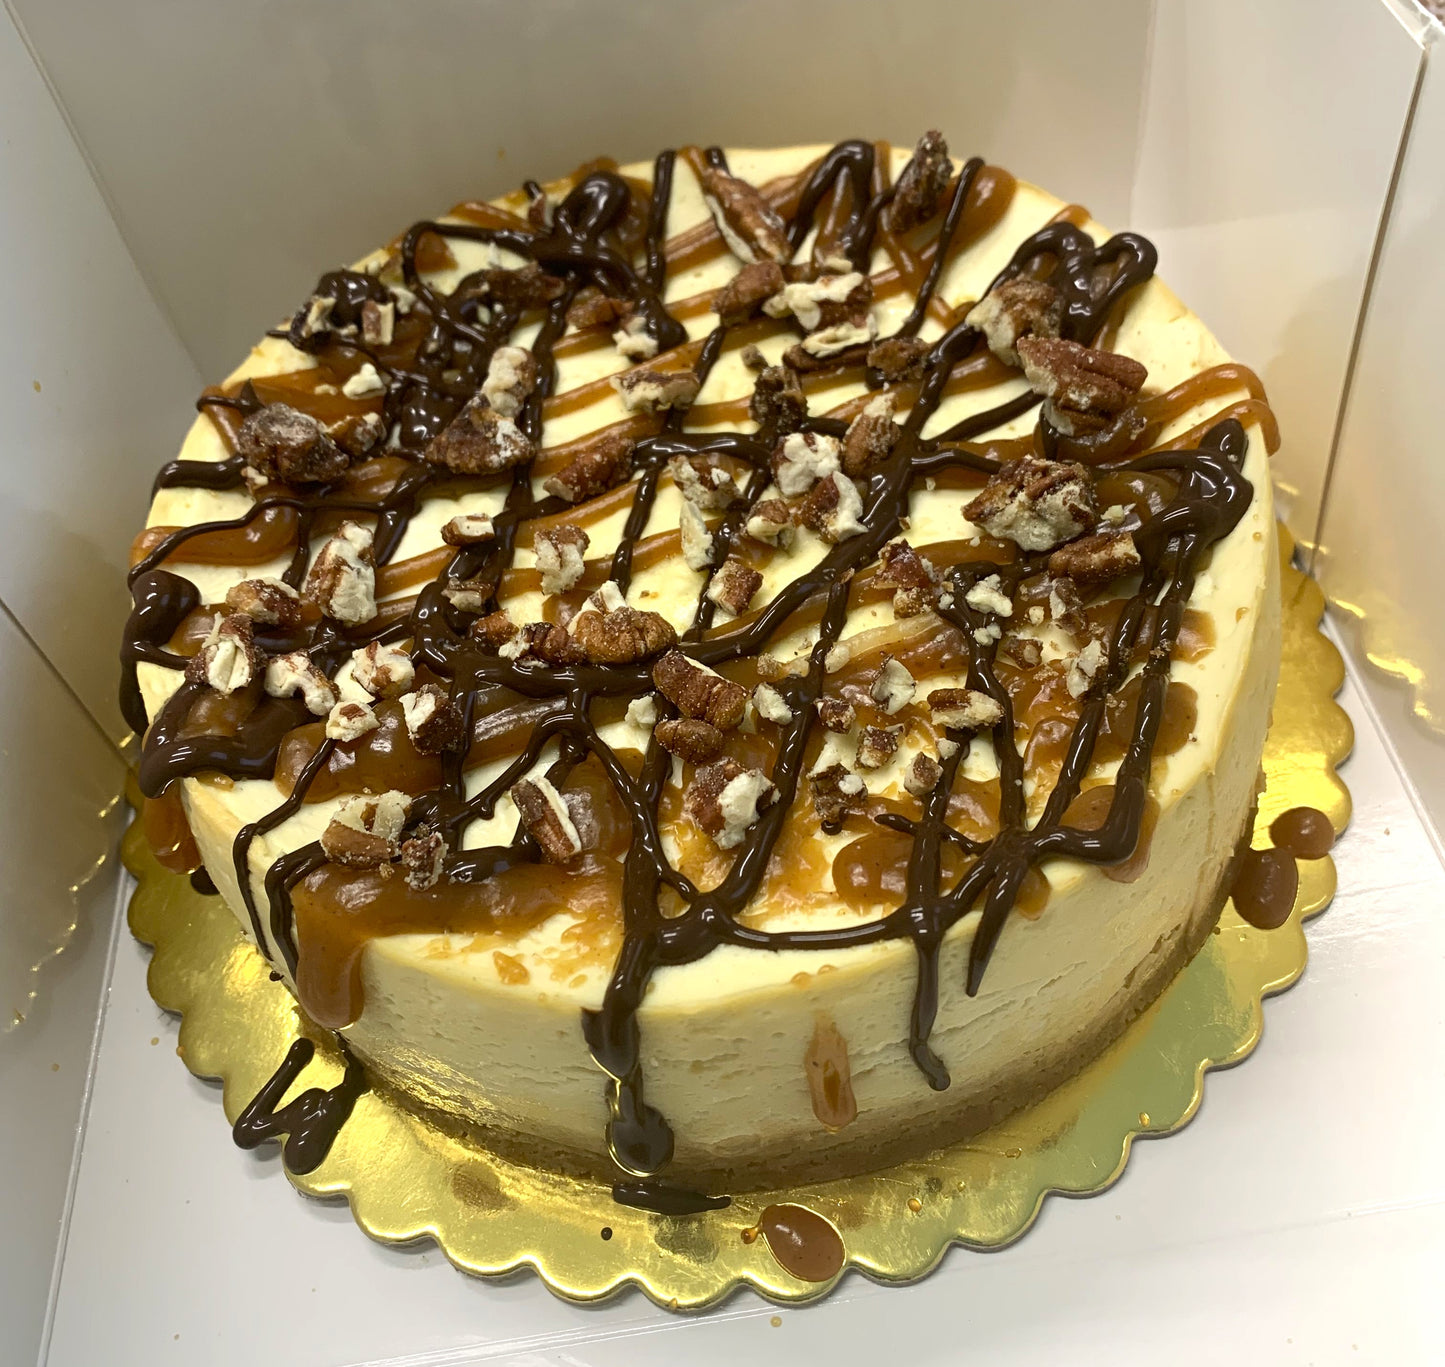 Keto Baked Cheesecake, full size - gluten free, sugar free